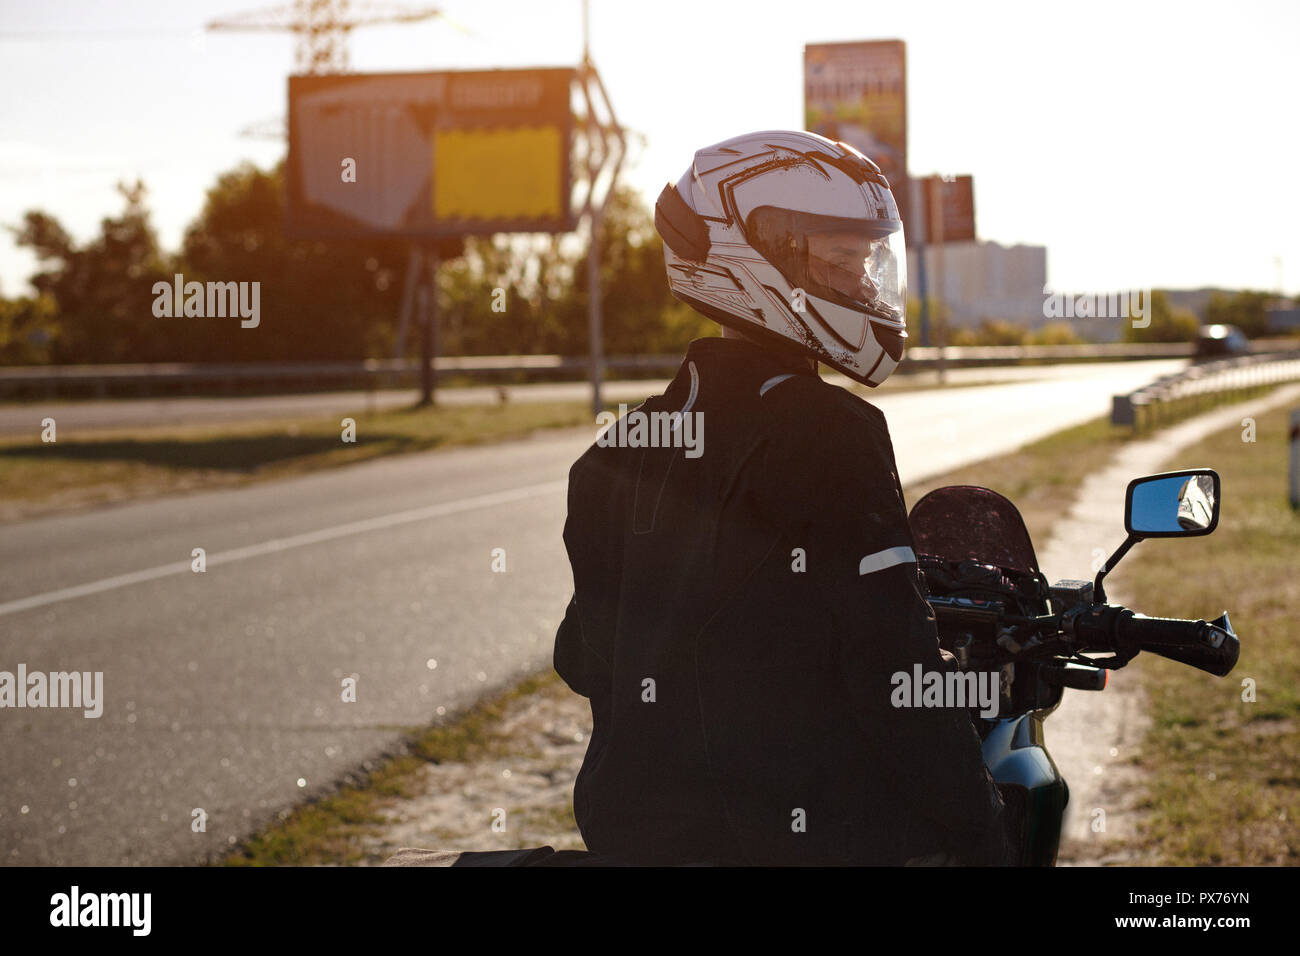 Half-turned biker on his motorcycle Stock Photo